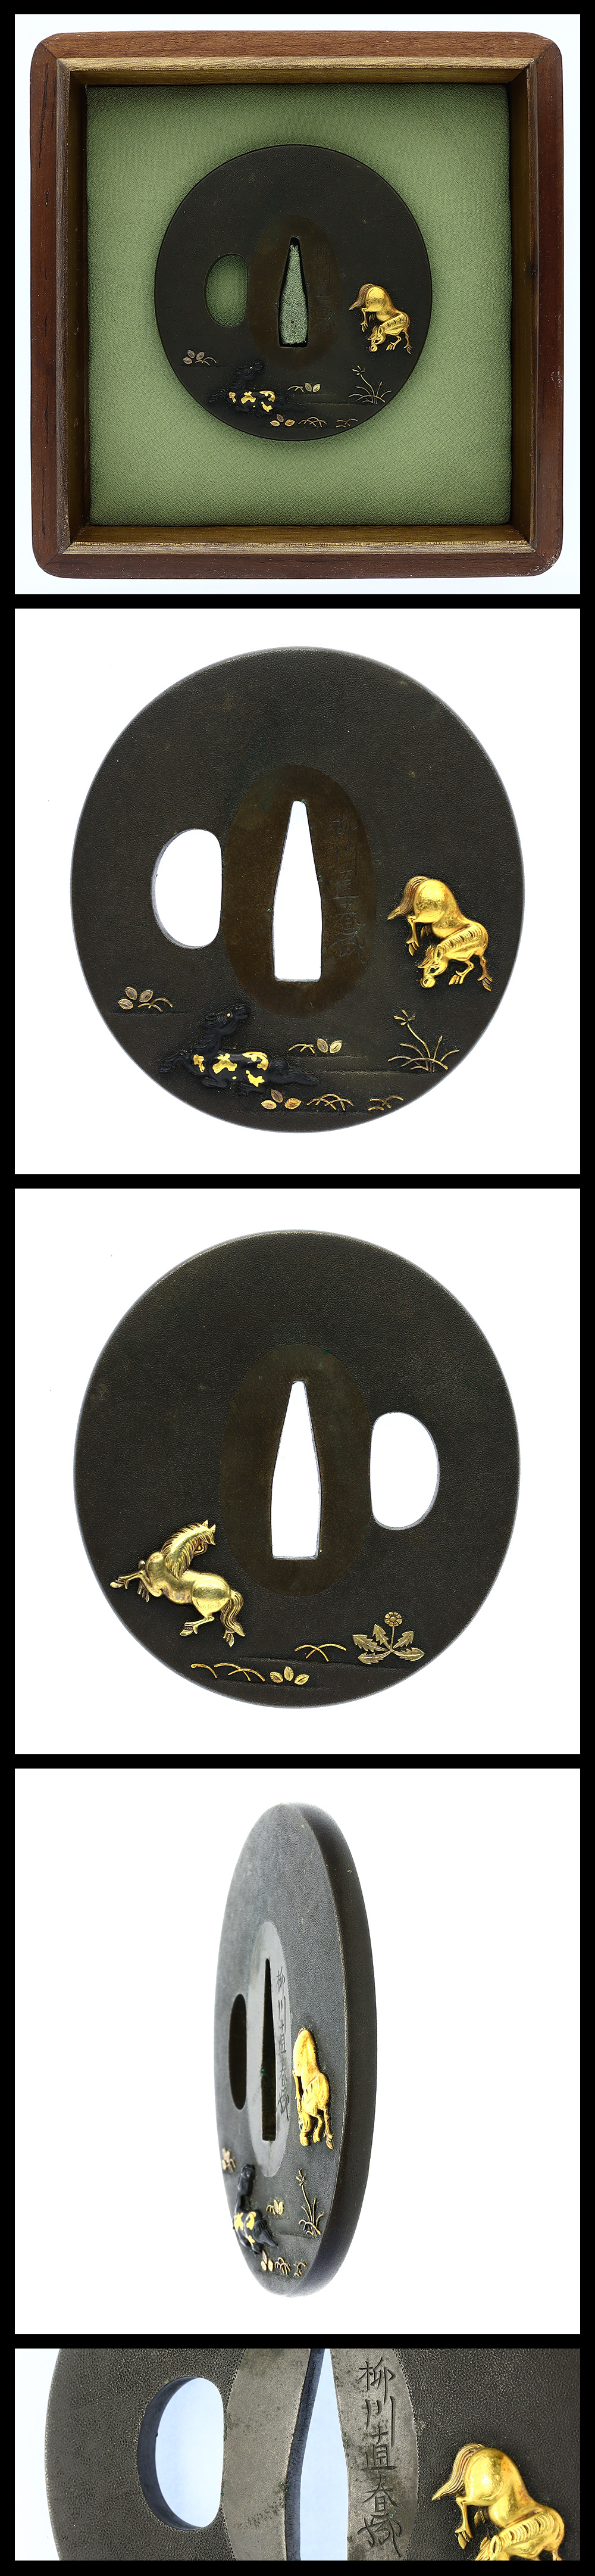 AF23197 鐔: 柳川直春(花押)(特別貴重刀装具) – 日本刀販売の葵美術